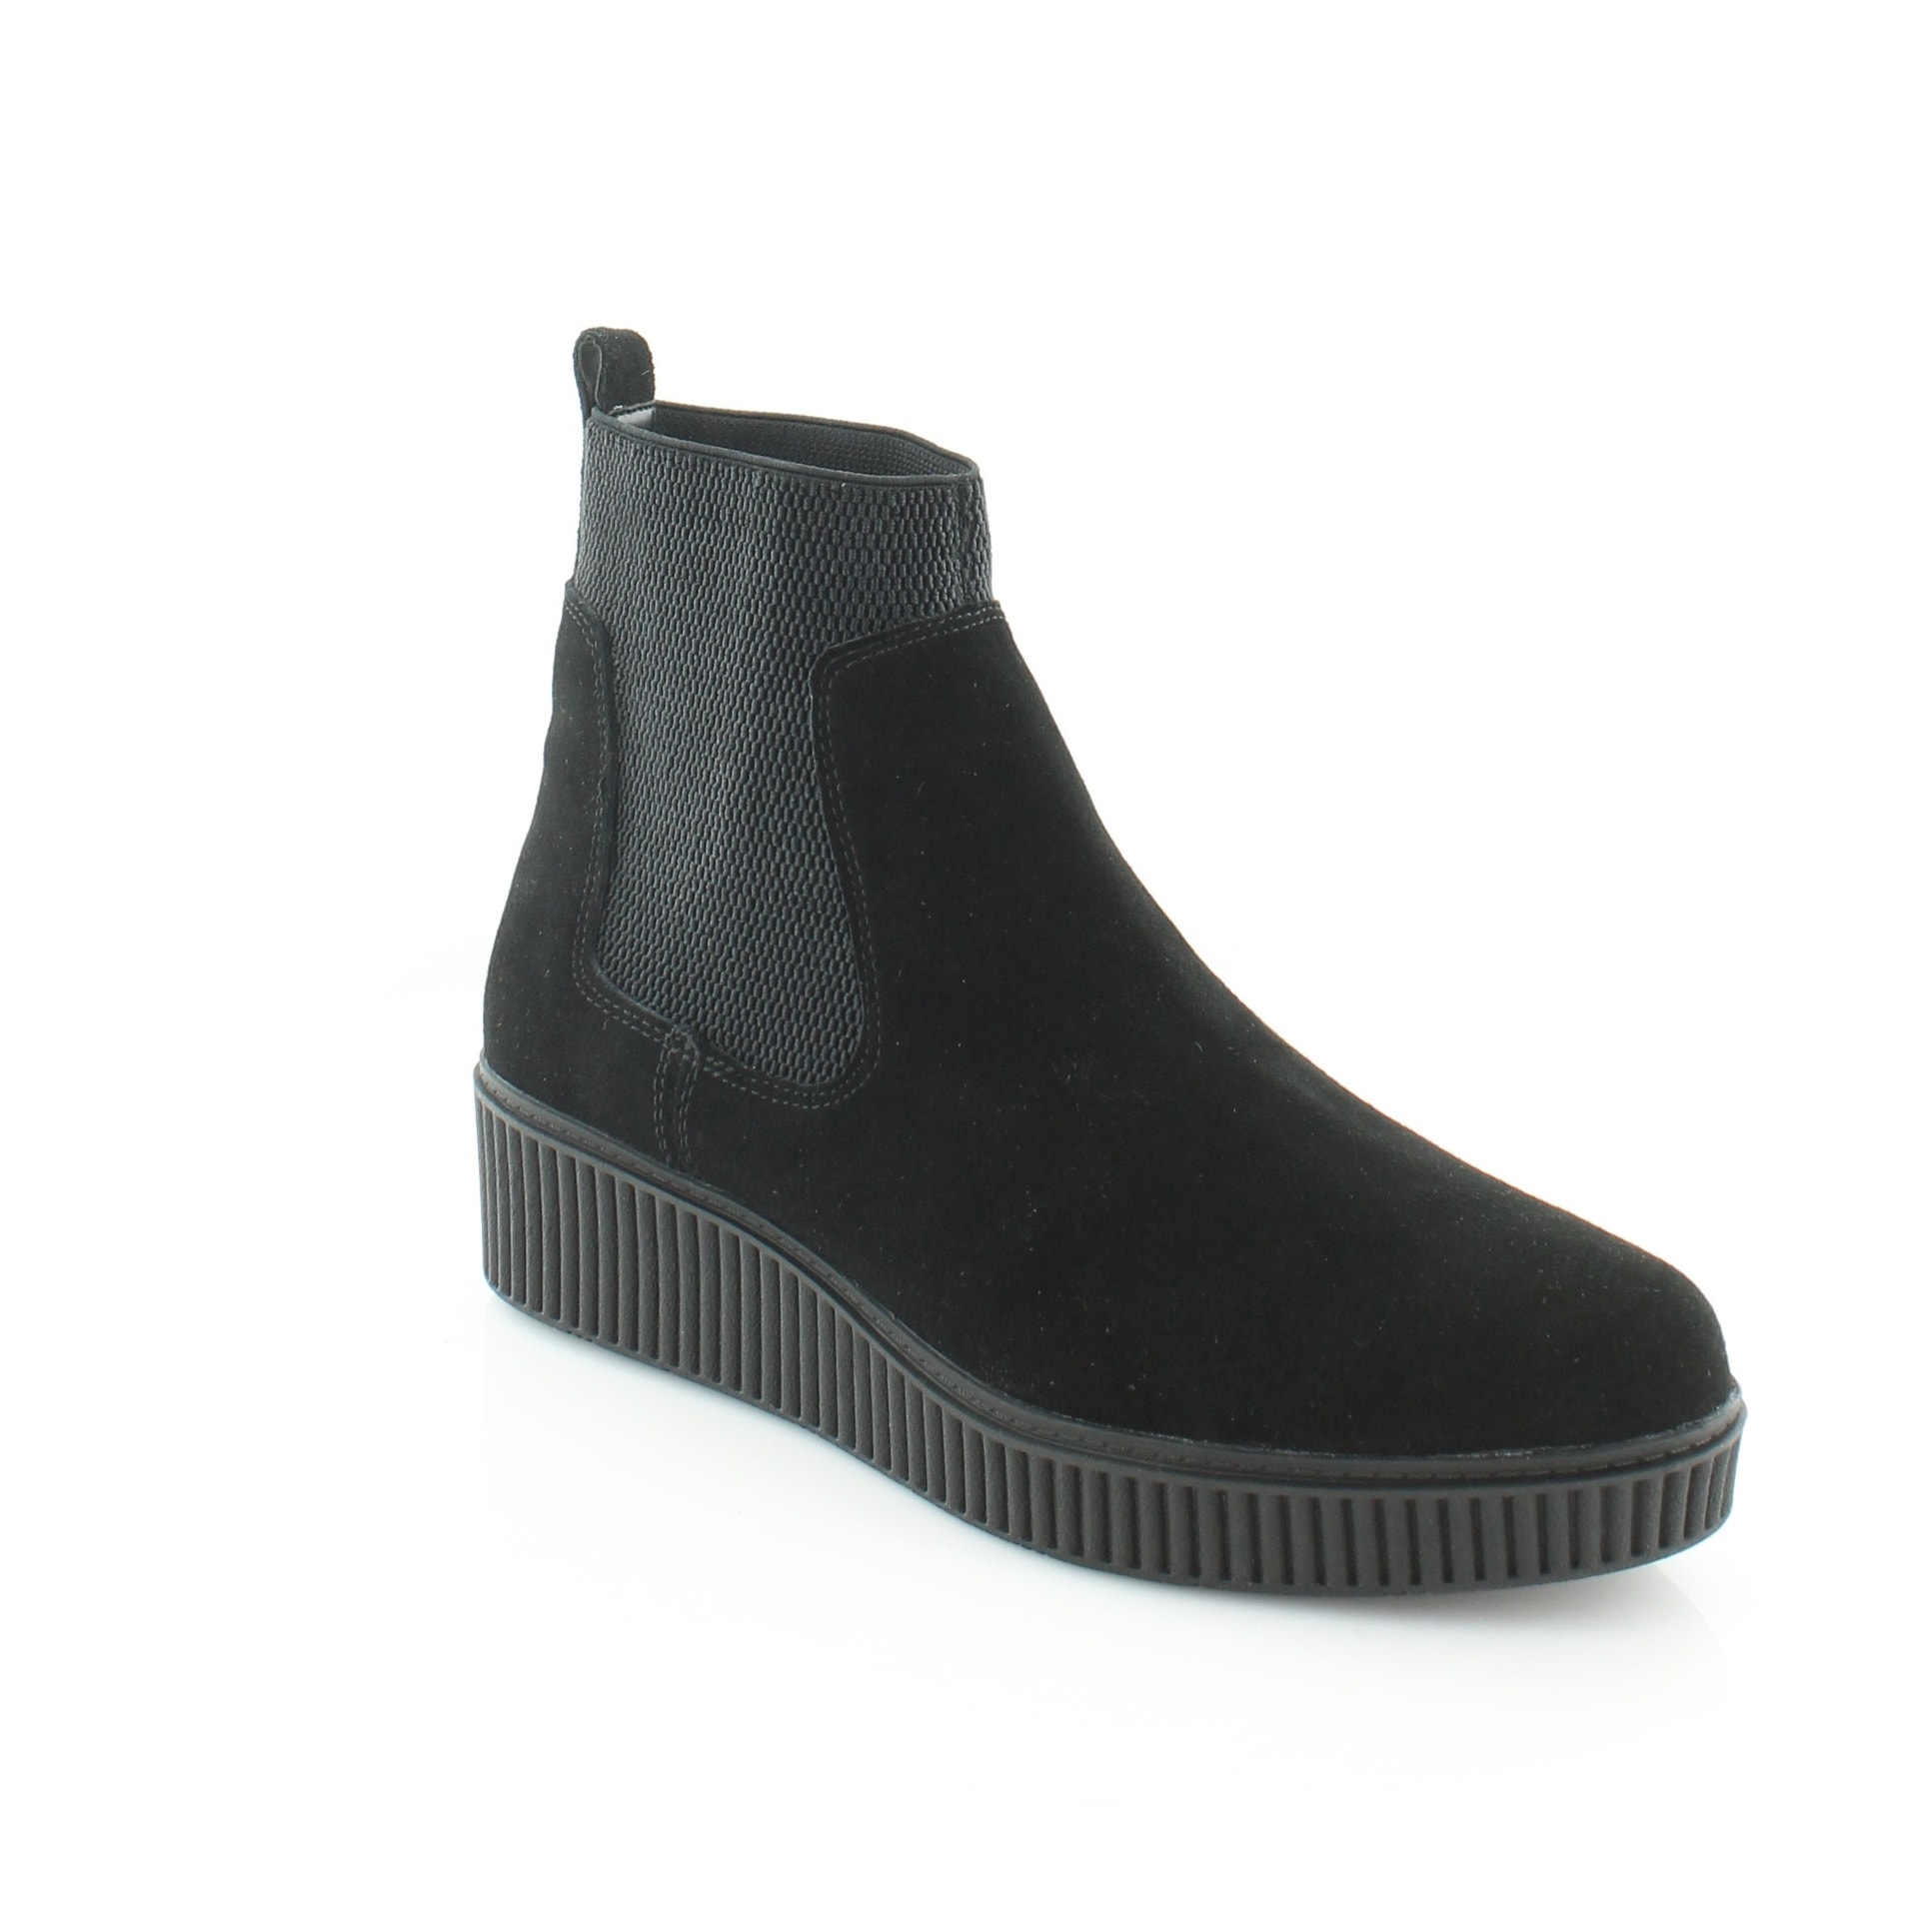 Boots Black - 9.5 - Overstock - 30426335